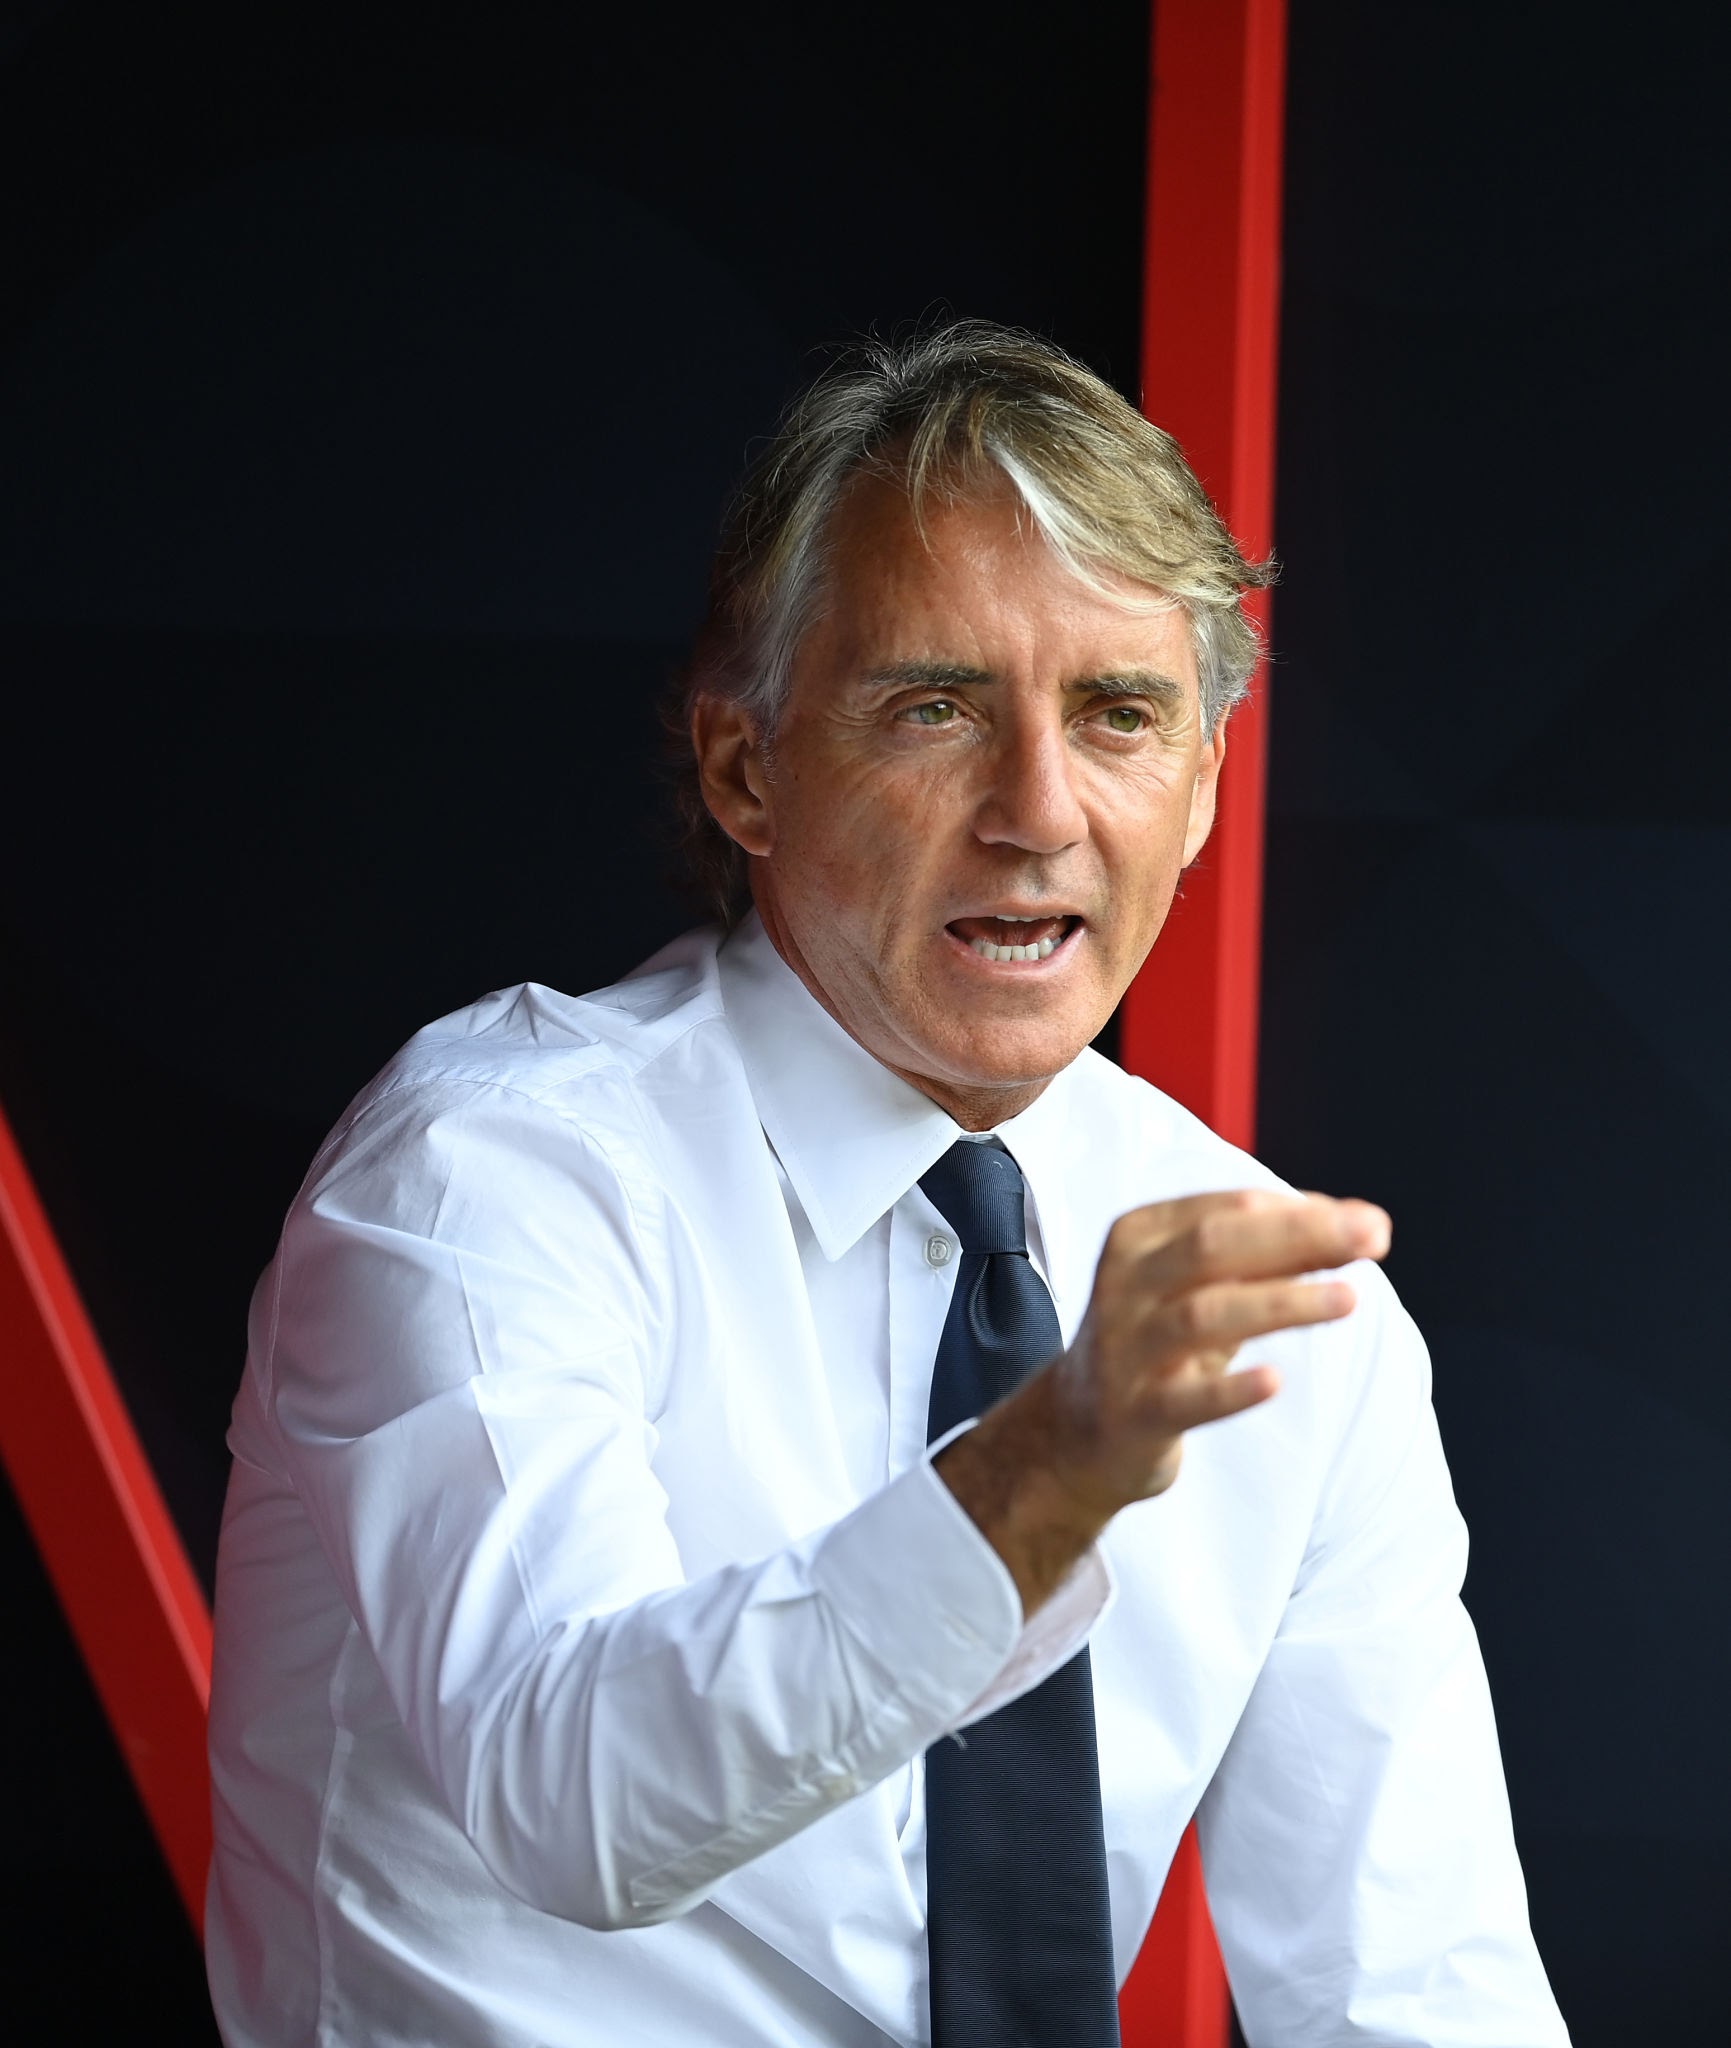 Saudi Arabia name Roberto Mancini as new national team coach